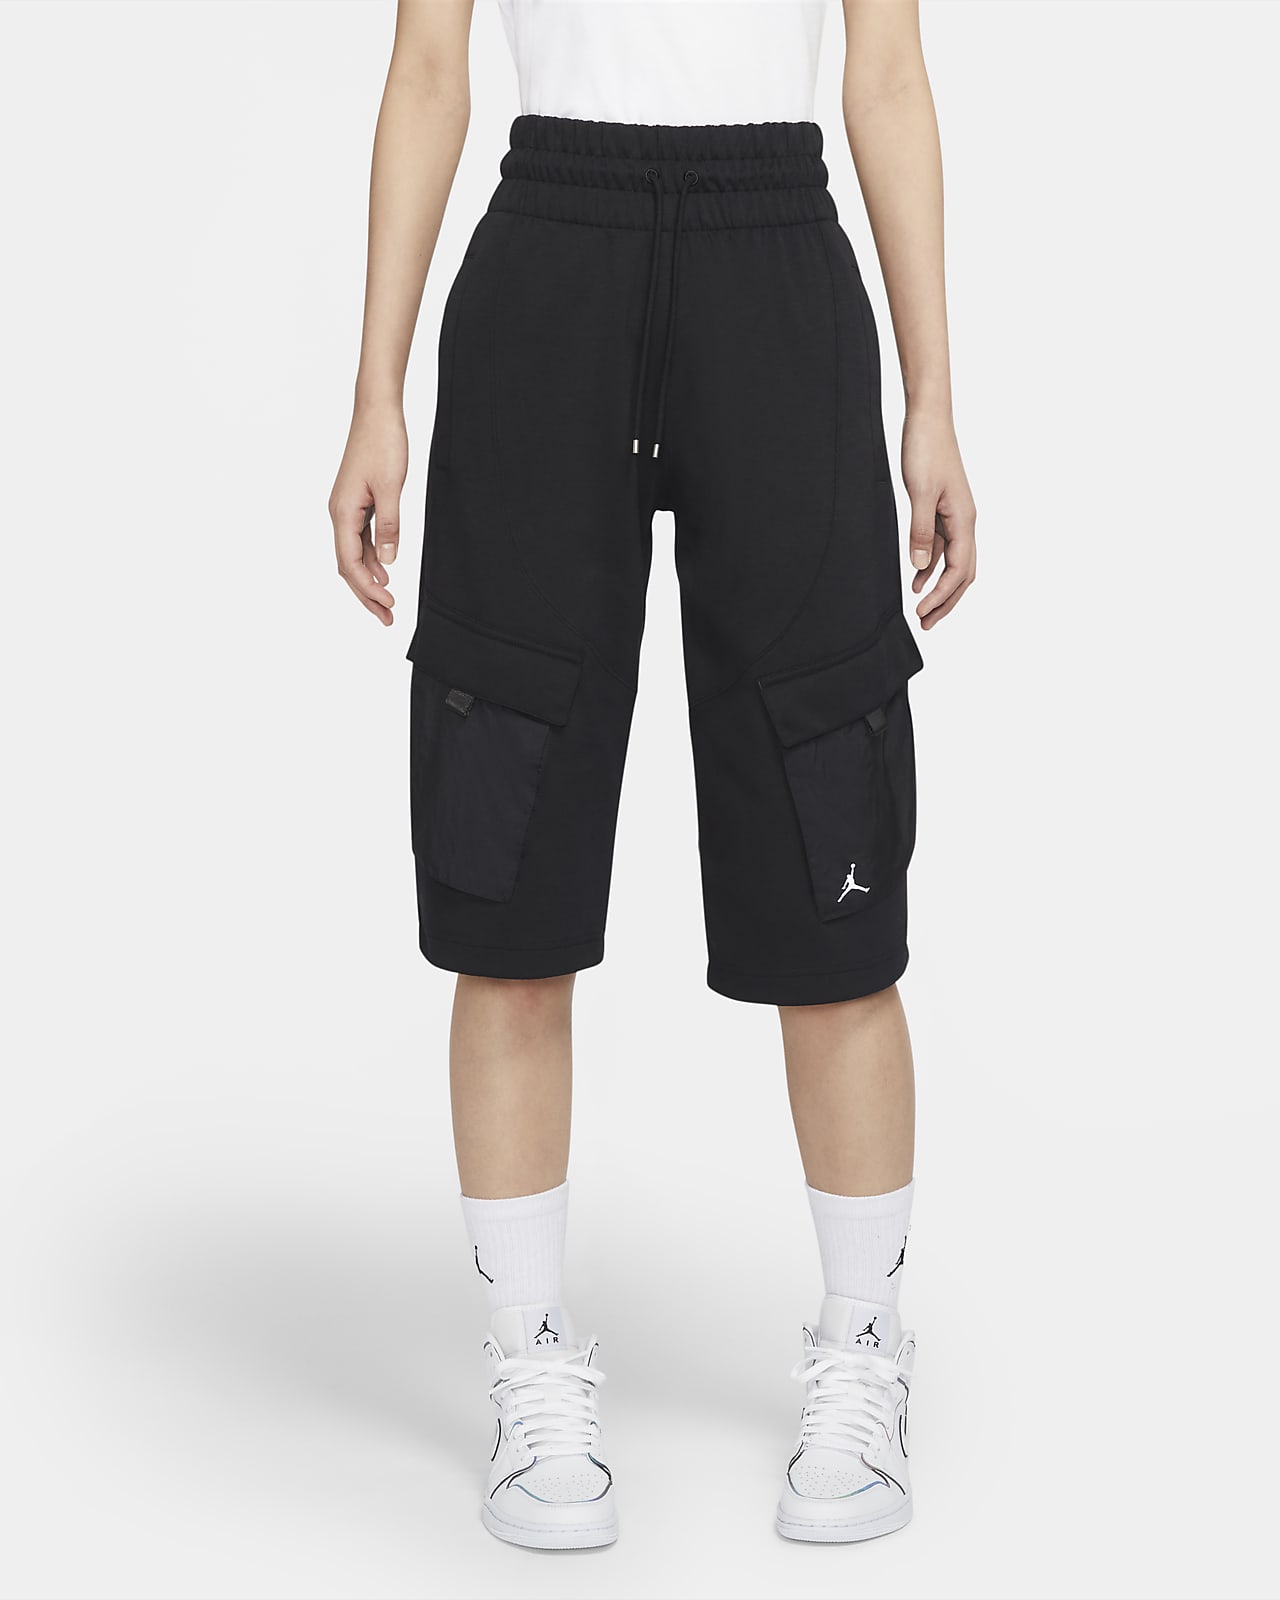 Jordan Women's Shorts. Nike ID